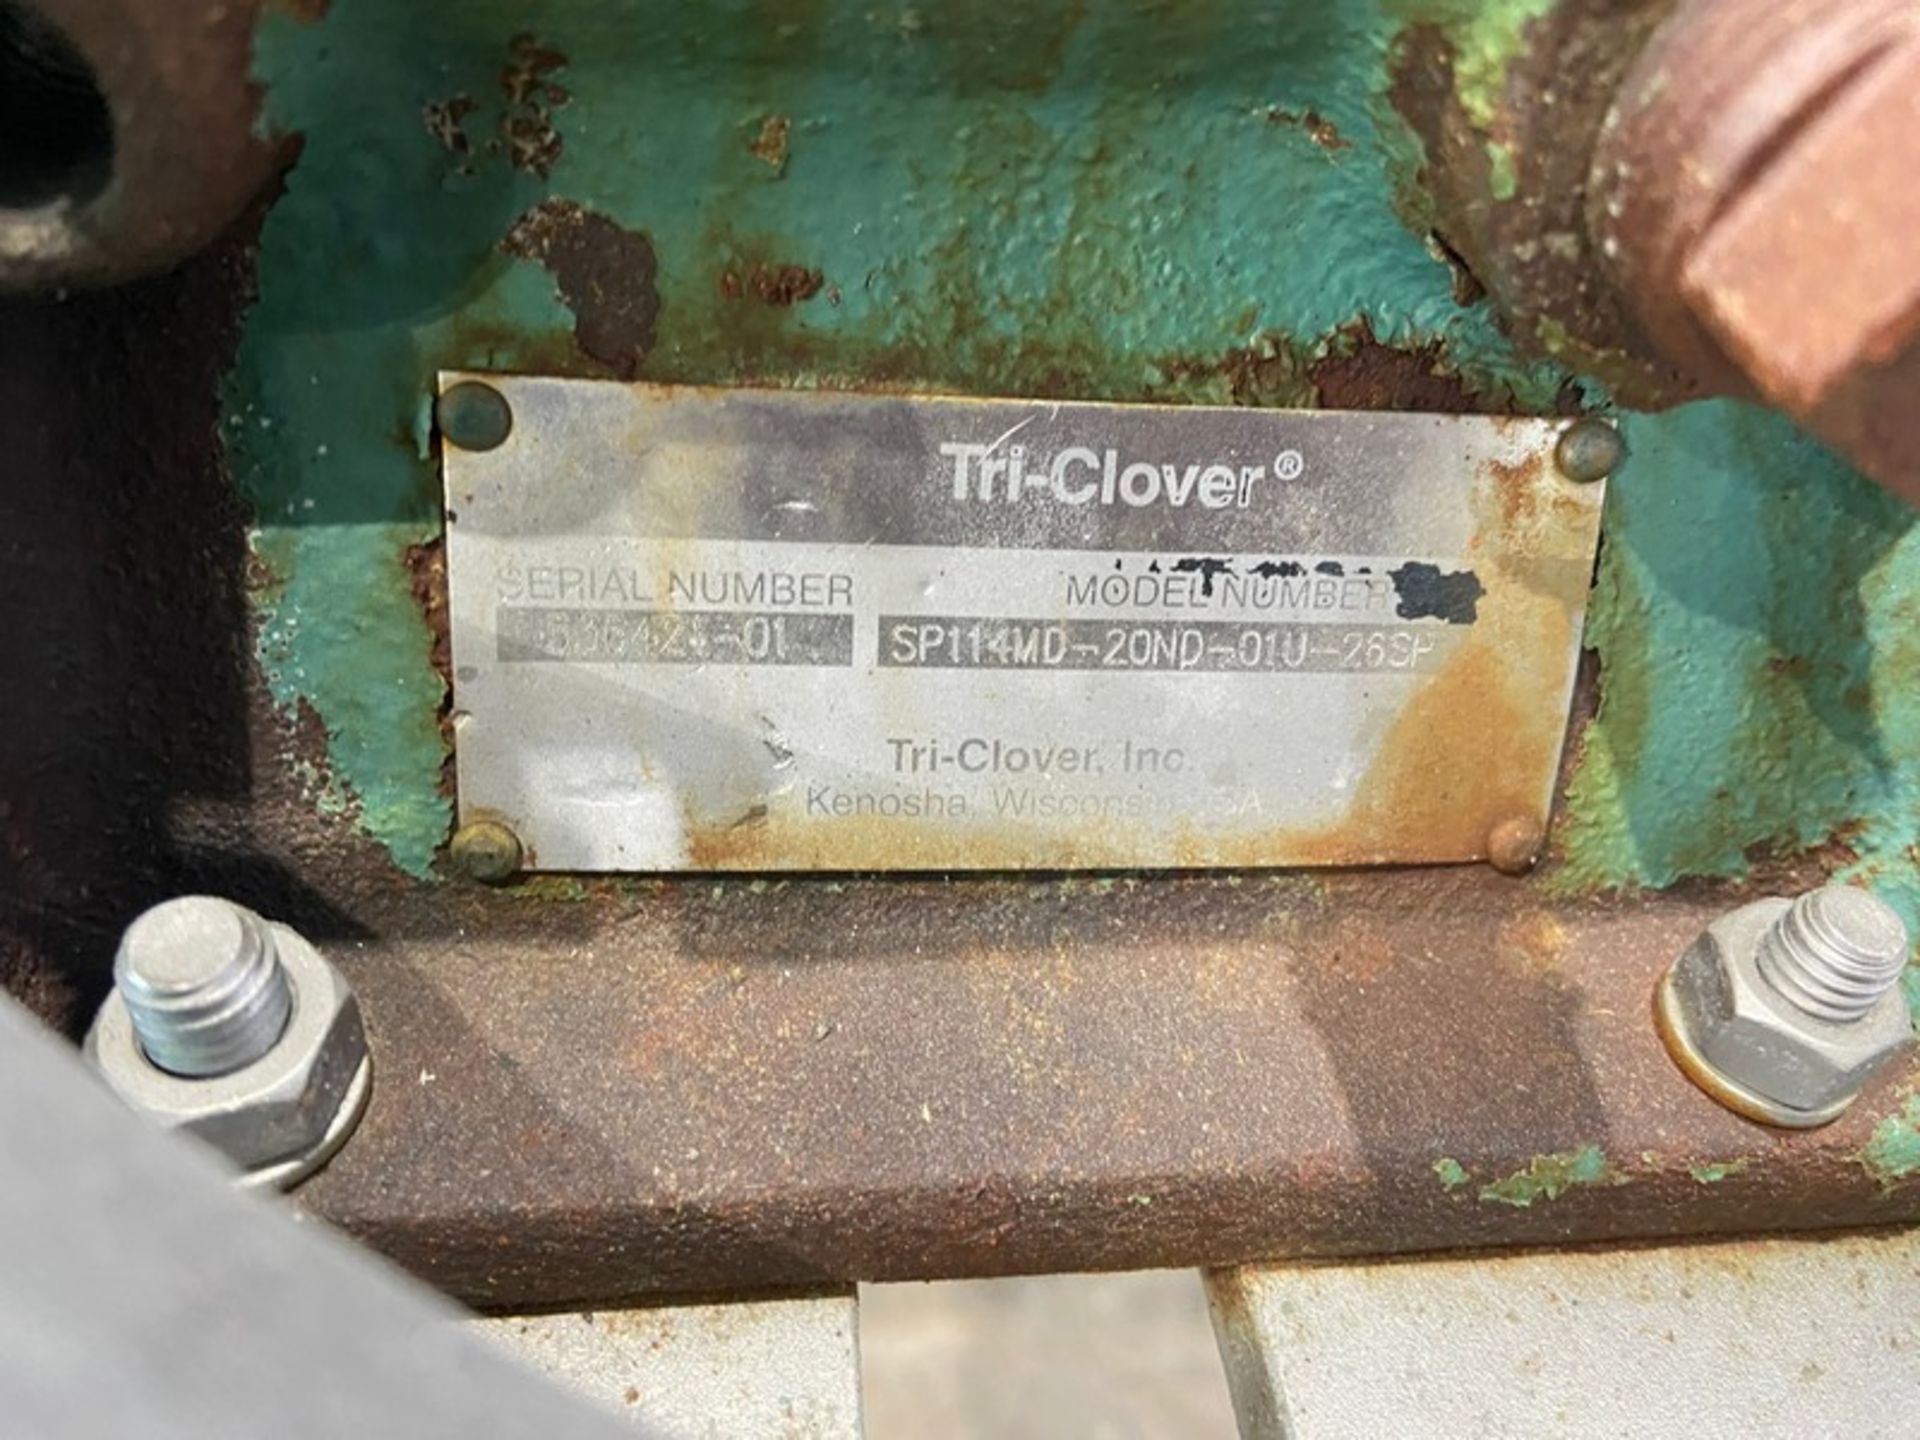 Tri-Clover 3/4 hp Centrifugal Pump, M/N SP114MD-20ND-01U-26SP, S/N 536421-01, 230/460 Volts, 3 - Image 4 of 5